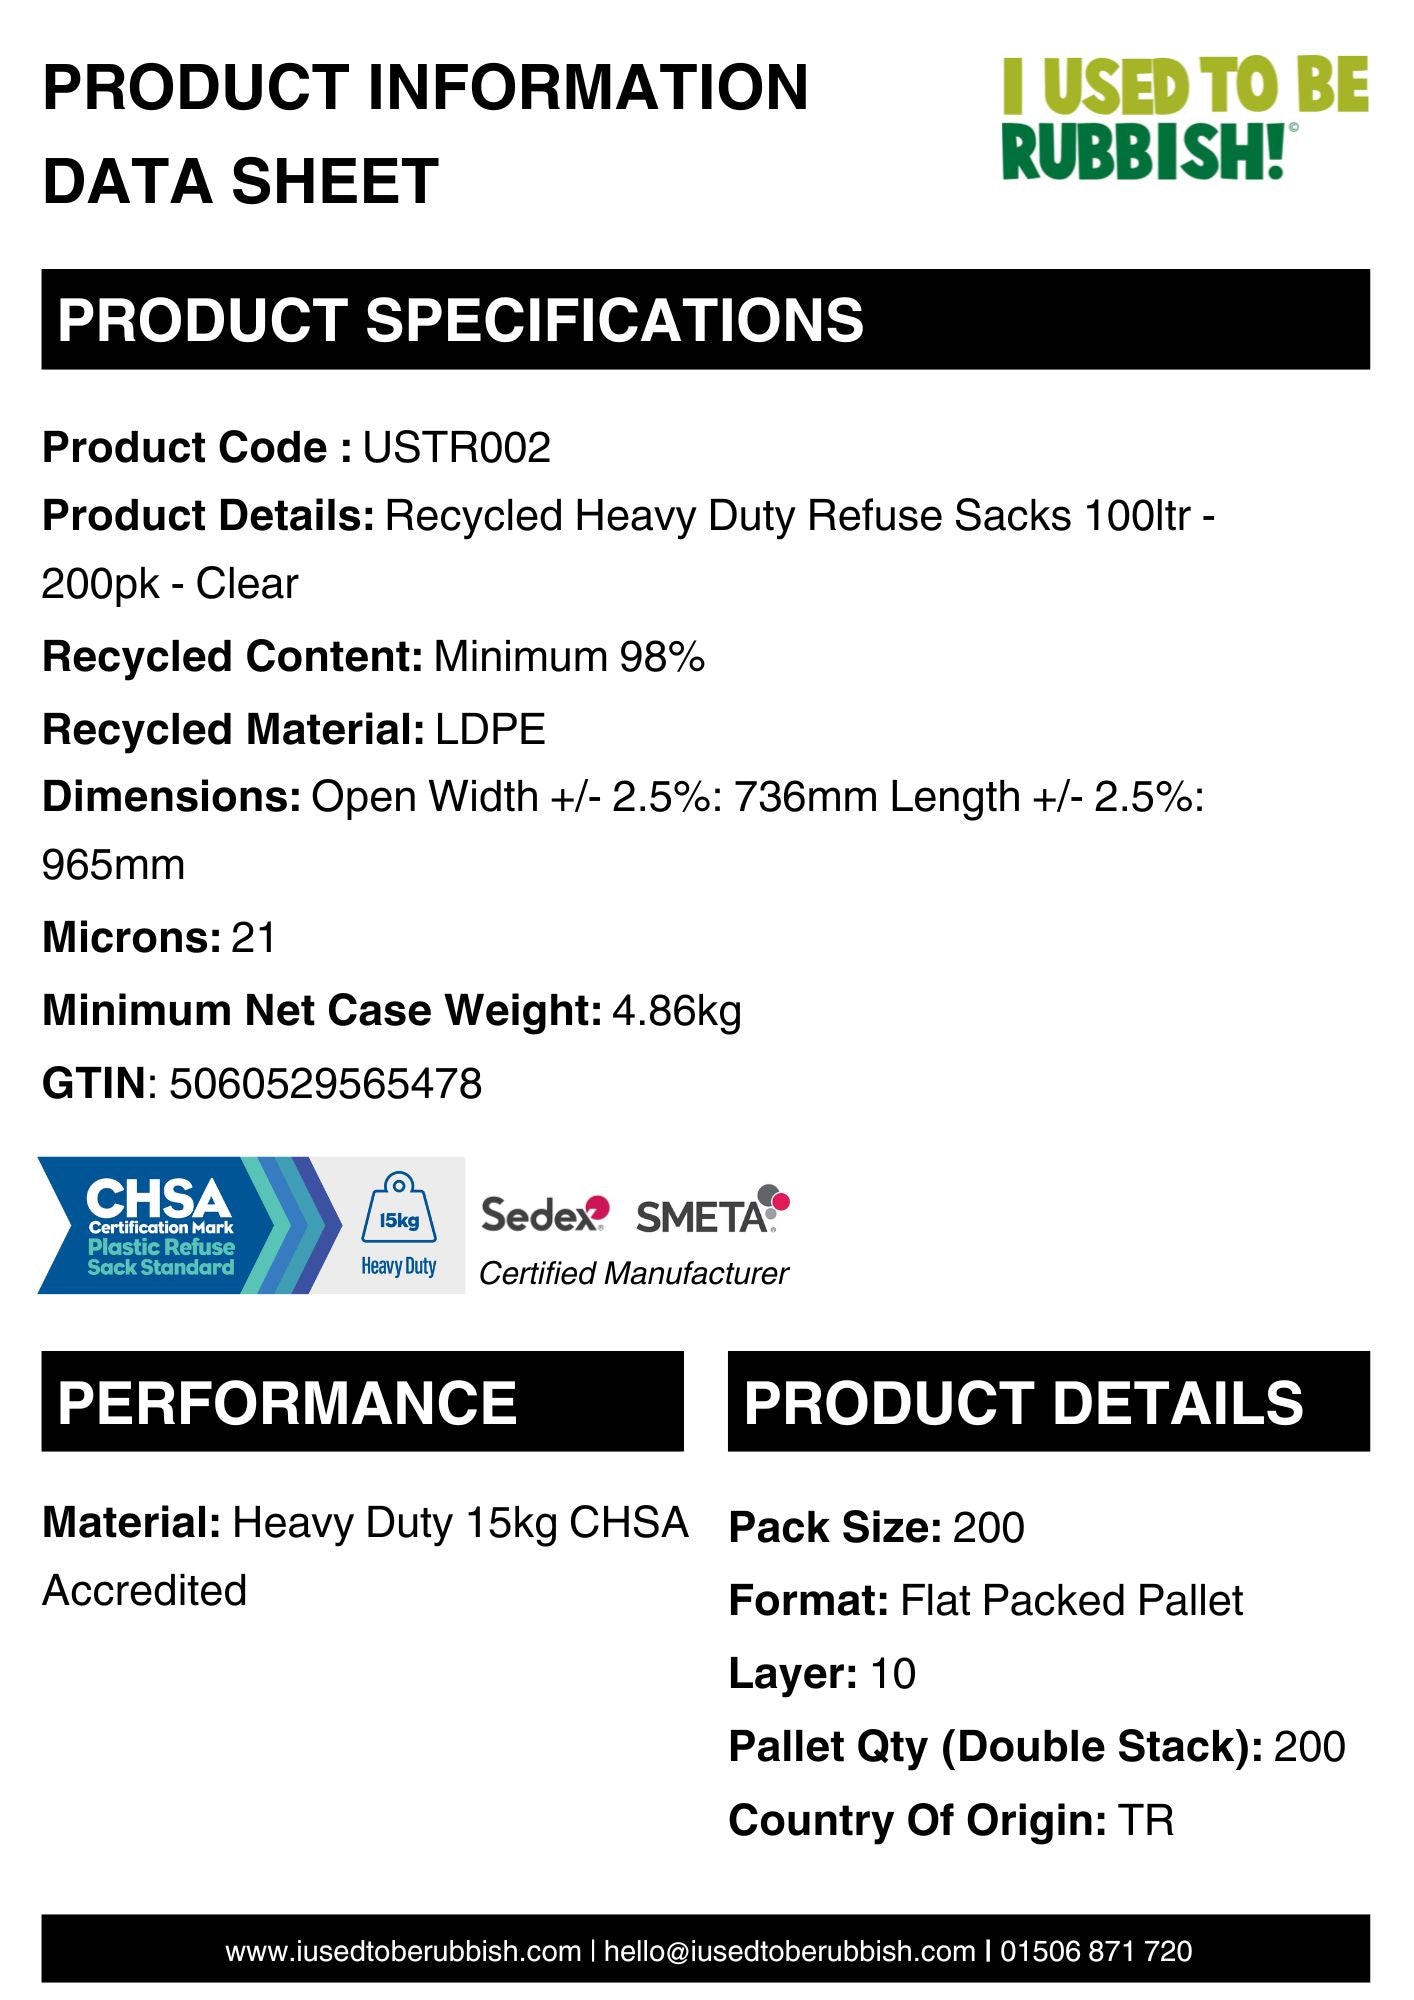 PALLET - Recycled Heavy Duty Refuse Sacks Food Waste 100ltr - 99 x 200pk - Clear  (USTR002)